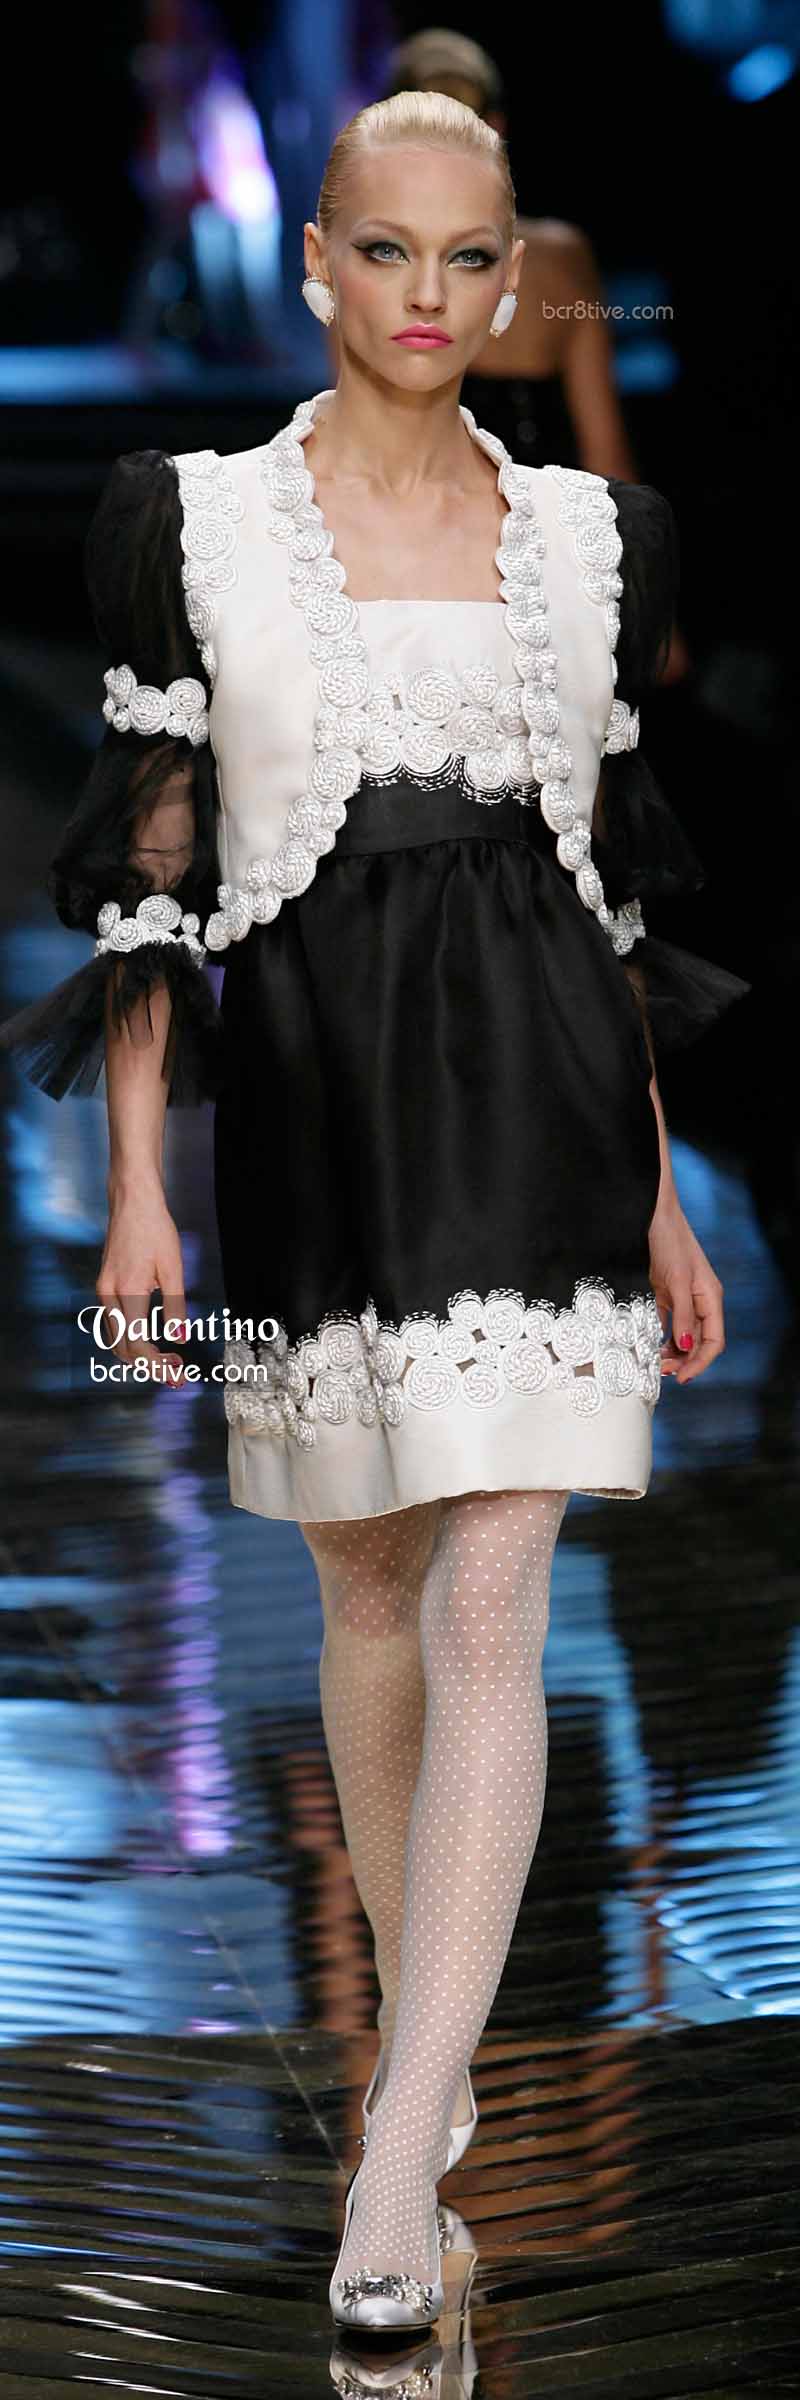 Valentino Embroidered Bolero and Dress in Black and White